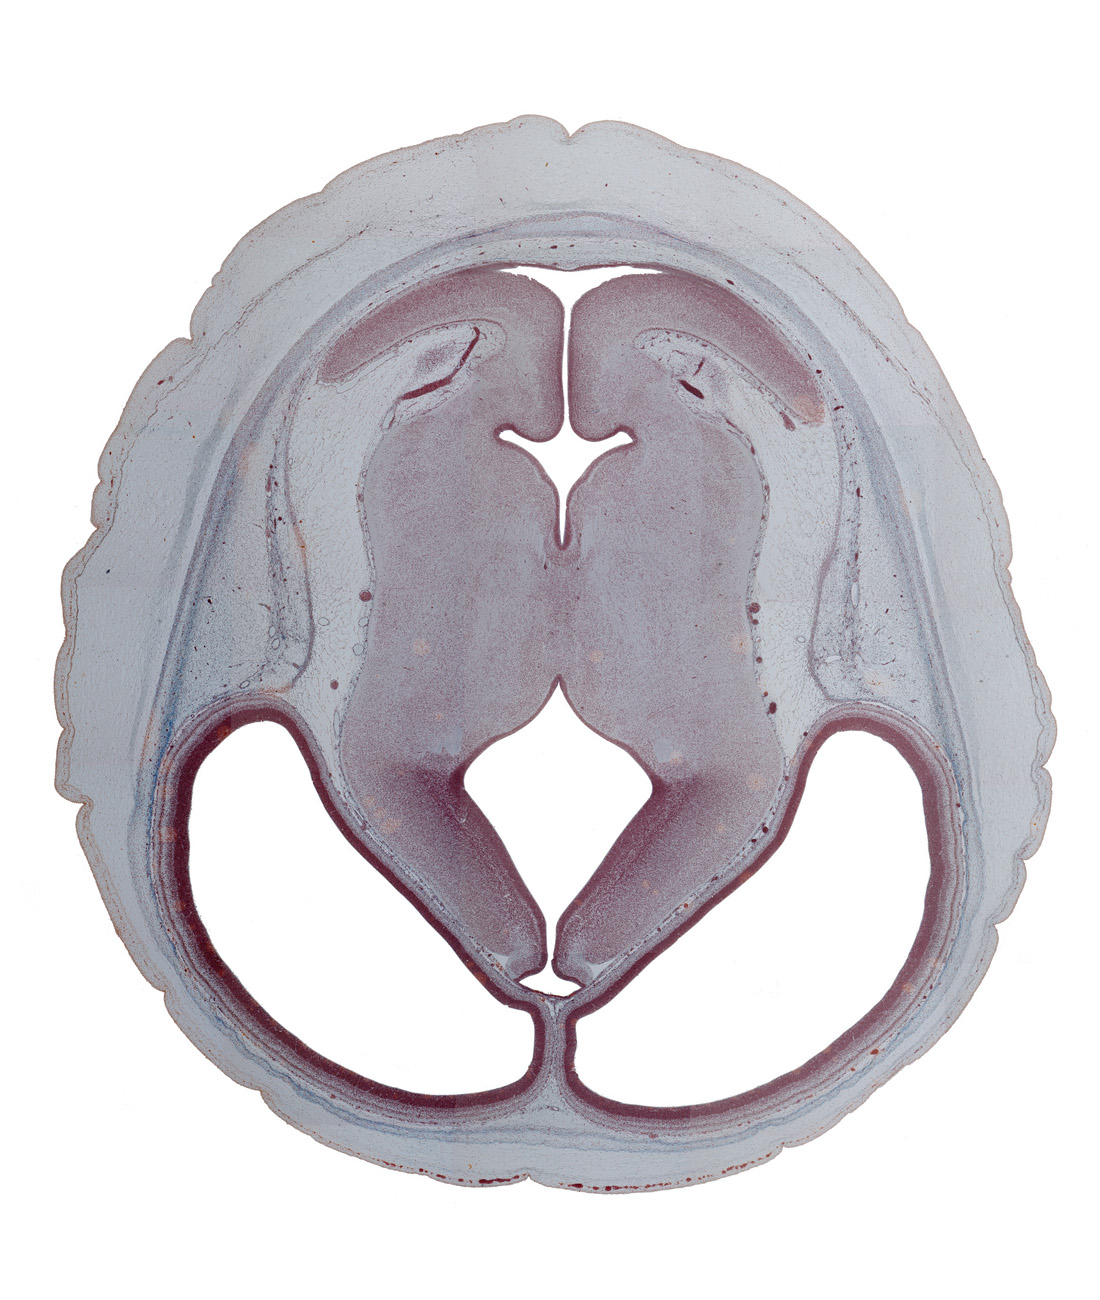 cerebellum, cerebral aqueduct (mesocoele), cerebral hemisphere, dorsal thalamus, epidermis, lateral ventricle, median sulcus, rhombencoel (fourth ventricle), subarachnoid space, subcutaneous tissue, third ventricle